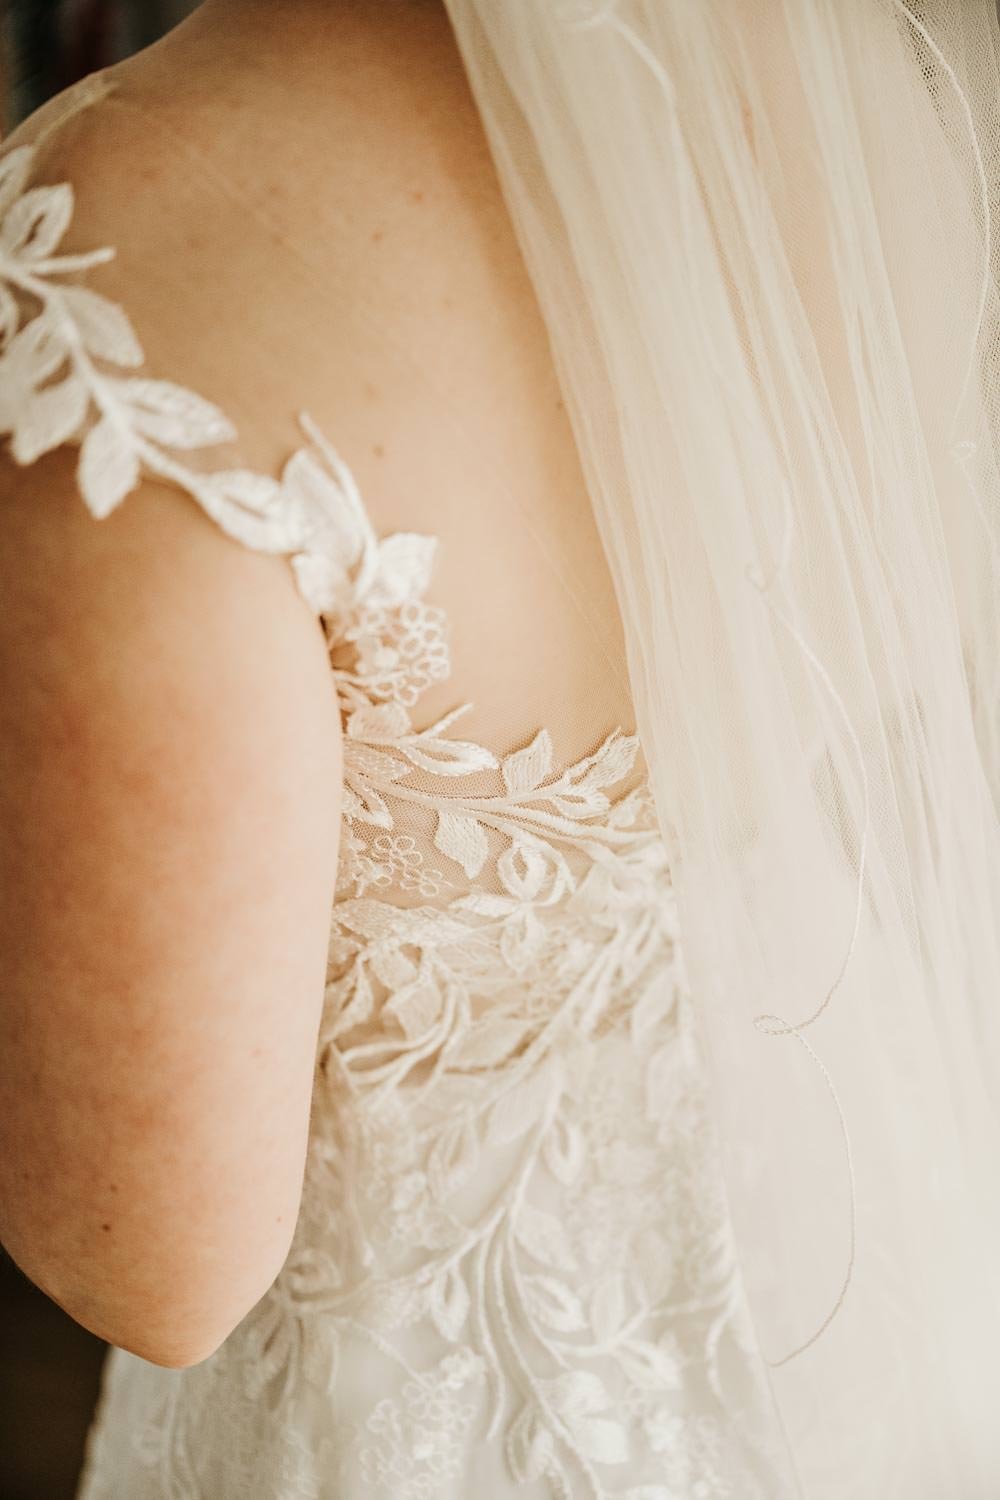 Bride's shoulder with floral lace wedding dress strap